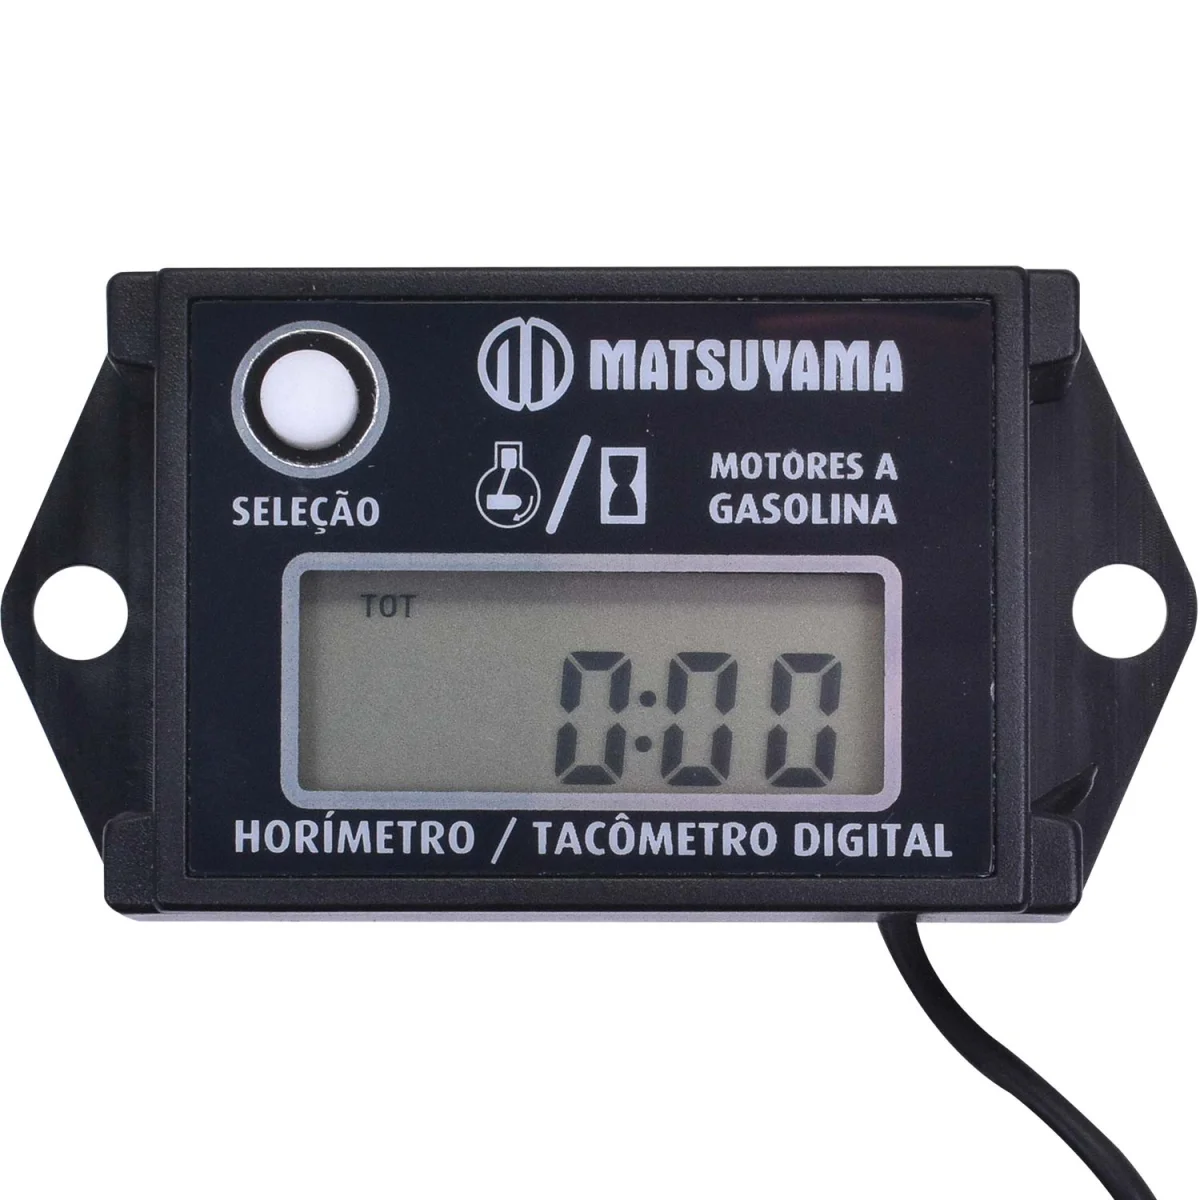 Tacômetro / Horímetro Digital P/ Motores Gasolina Matsuyama